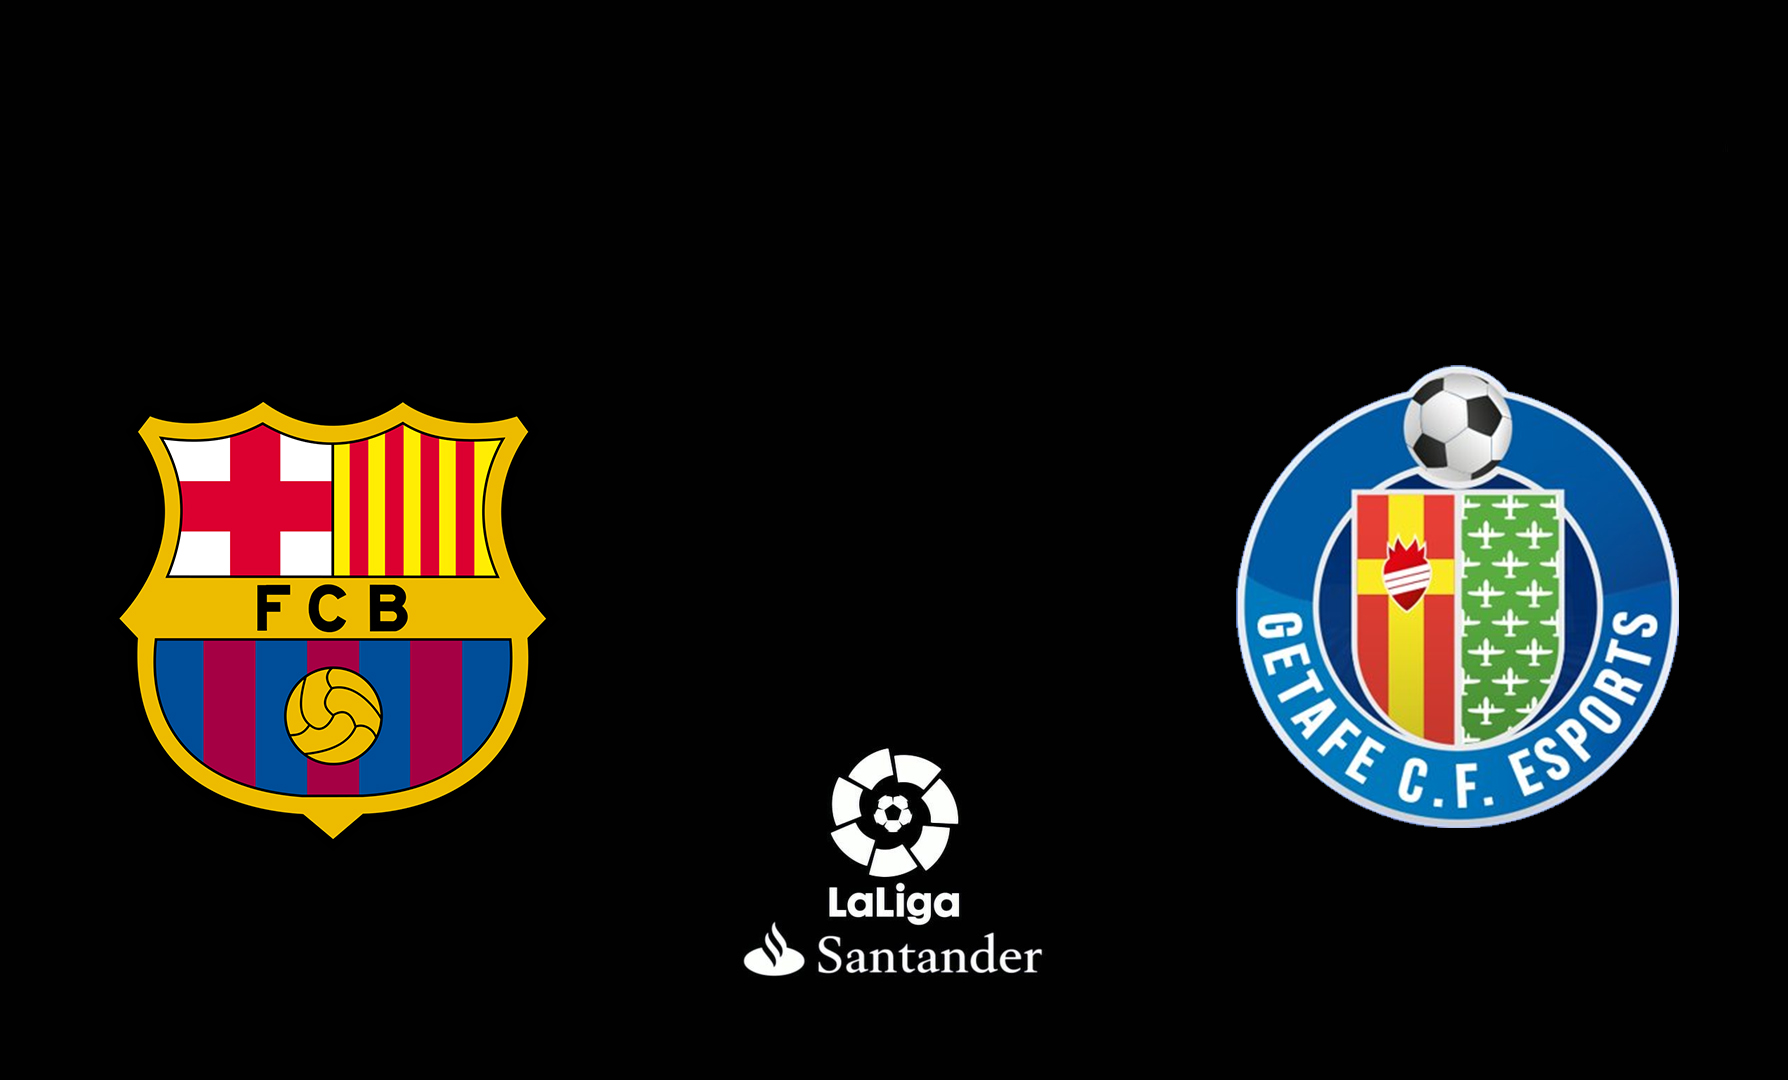 soi-keo-ca-cuoc-bong-da-ngay-9-2-Barcelona-vs-Getafe-do-it-thang-do-nhieu-b9 1